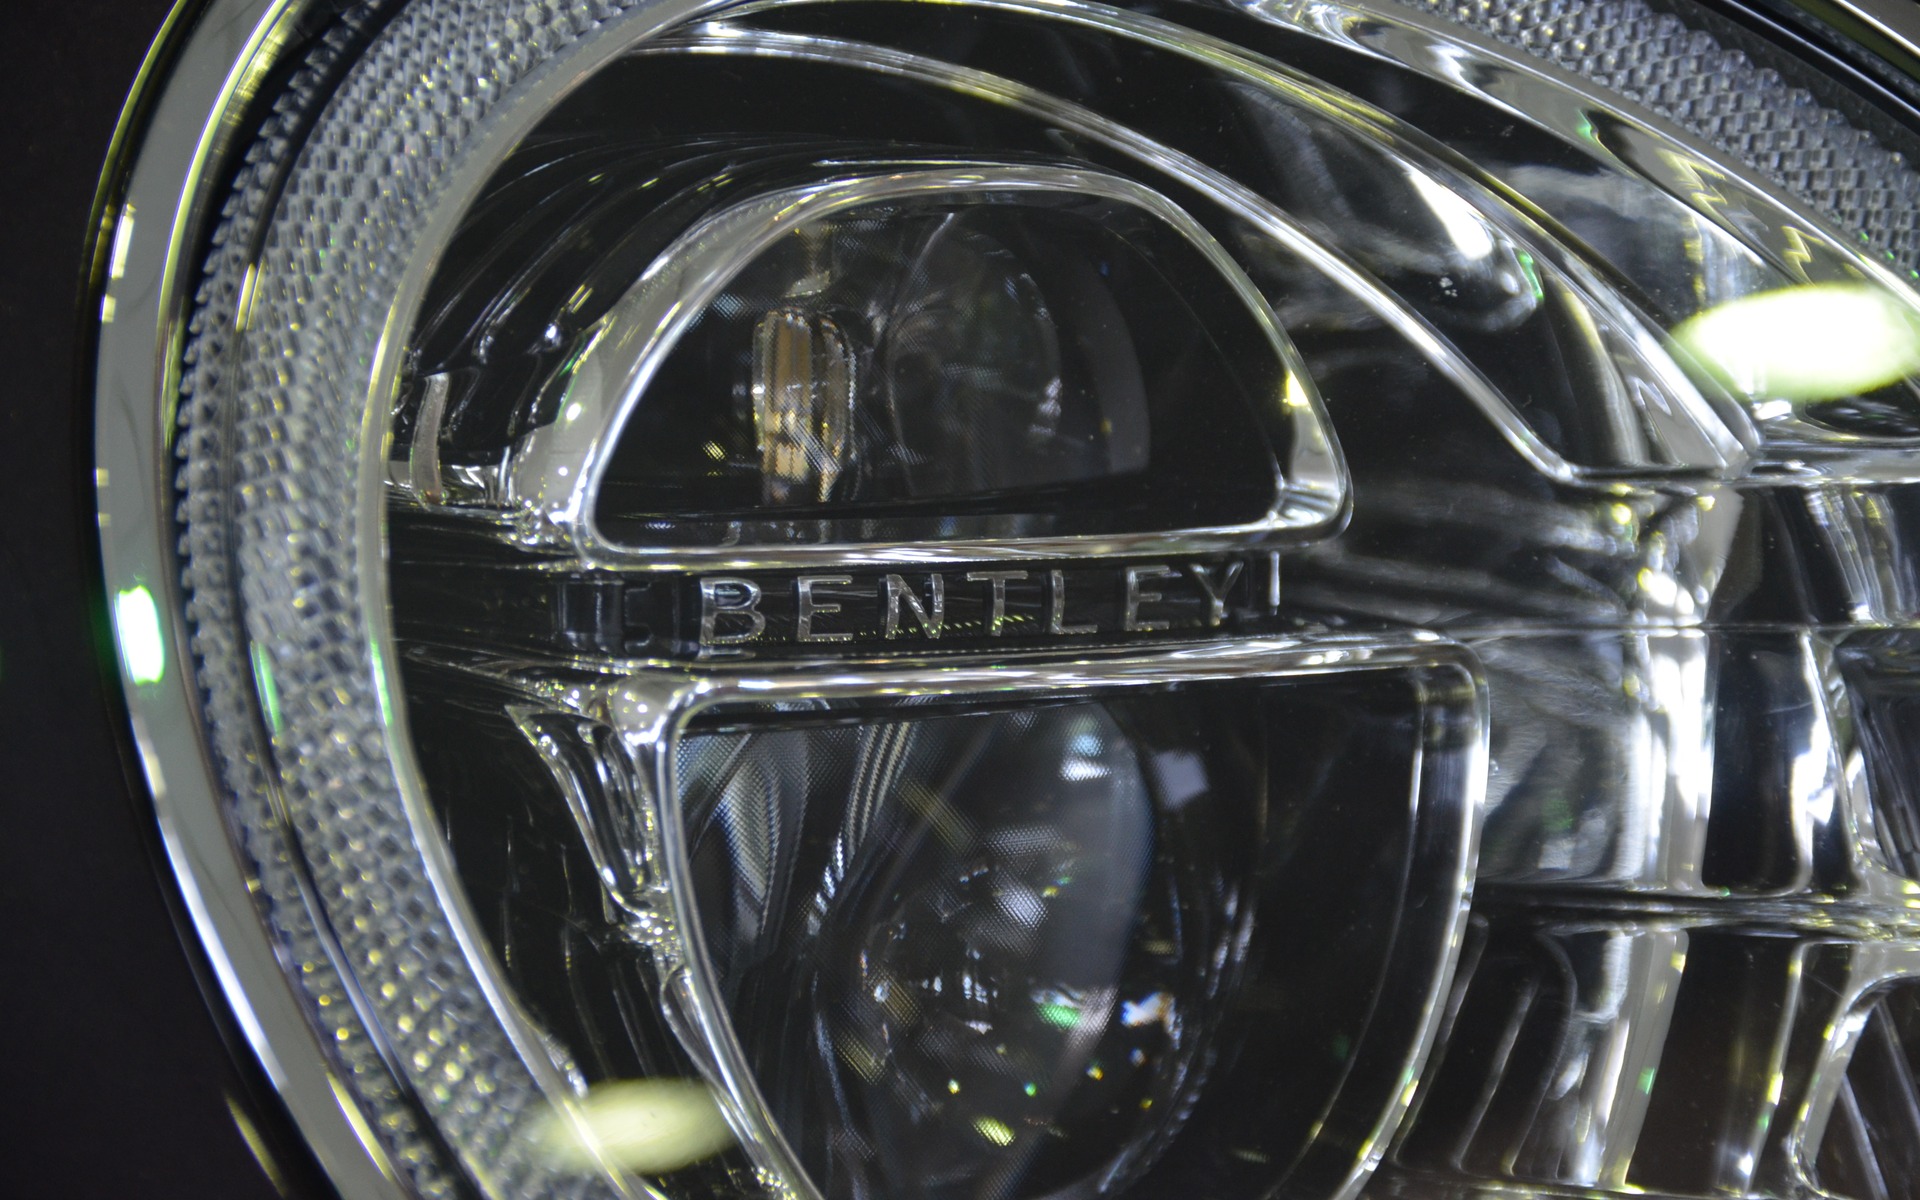 The detailing of the 2017 Bentley Bentayga's headlight cluster.